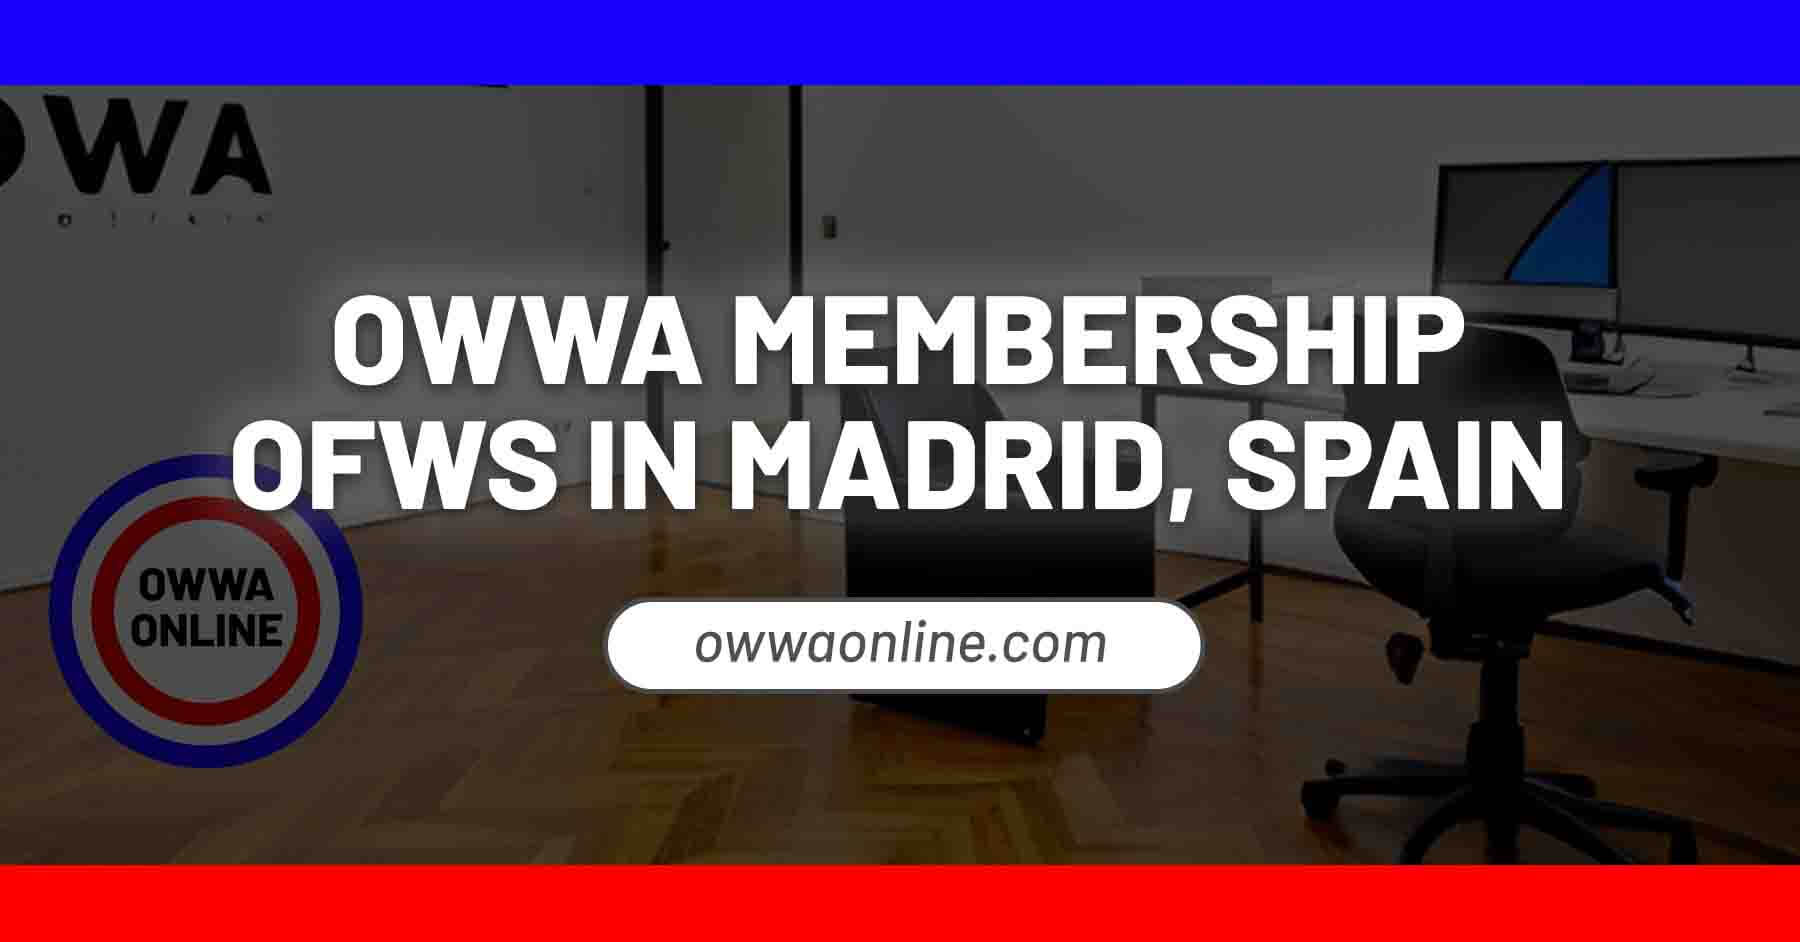 application for owwa membership renewal in Madrid Spain